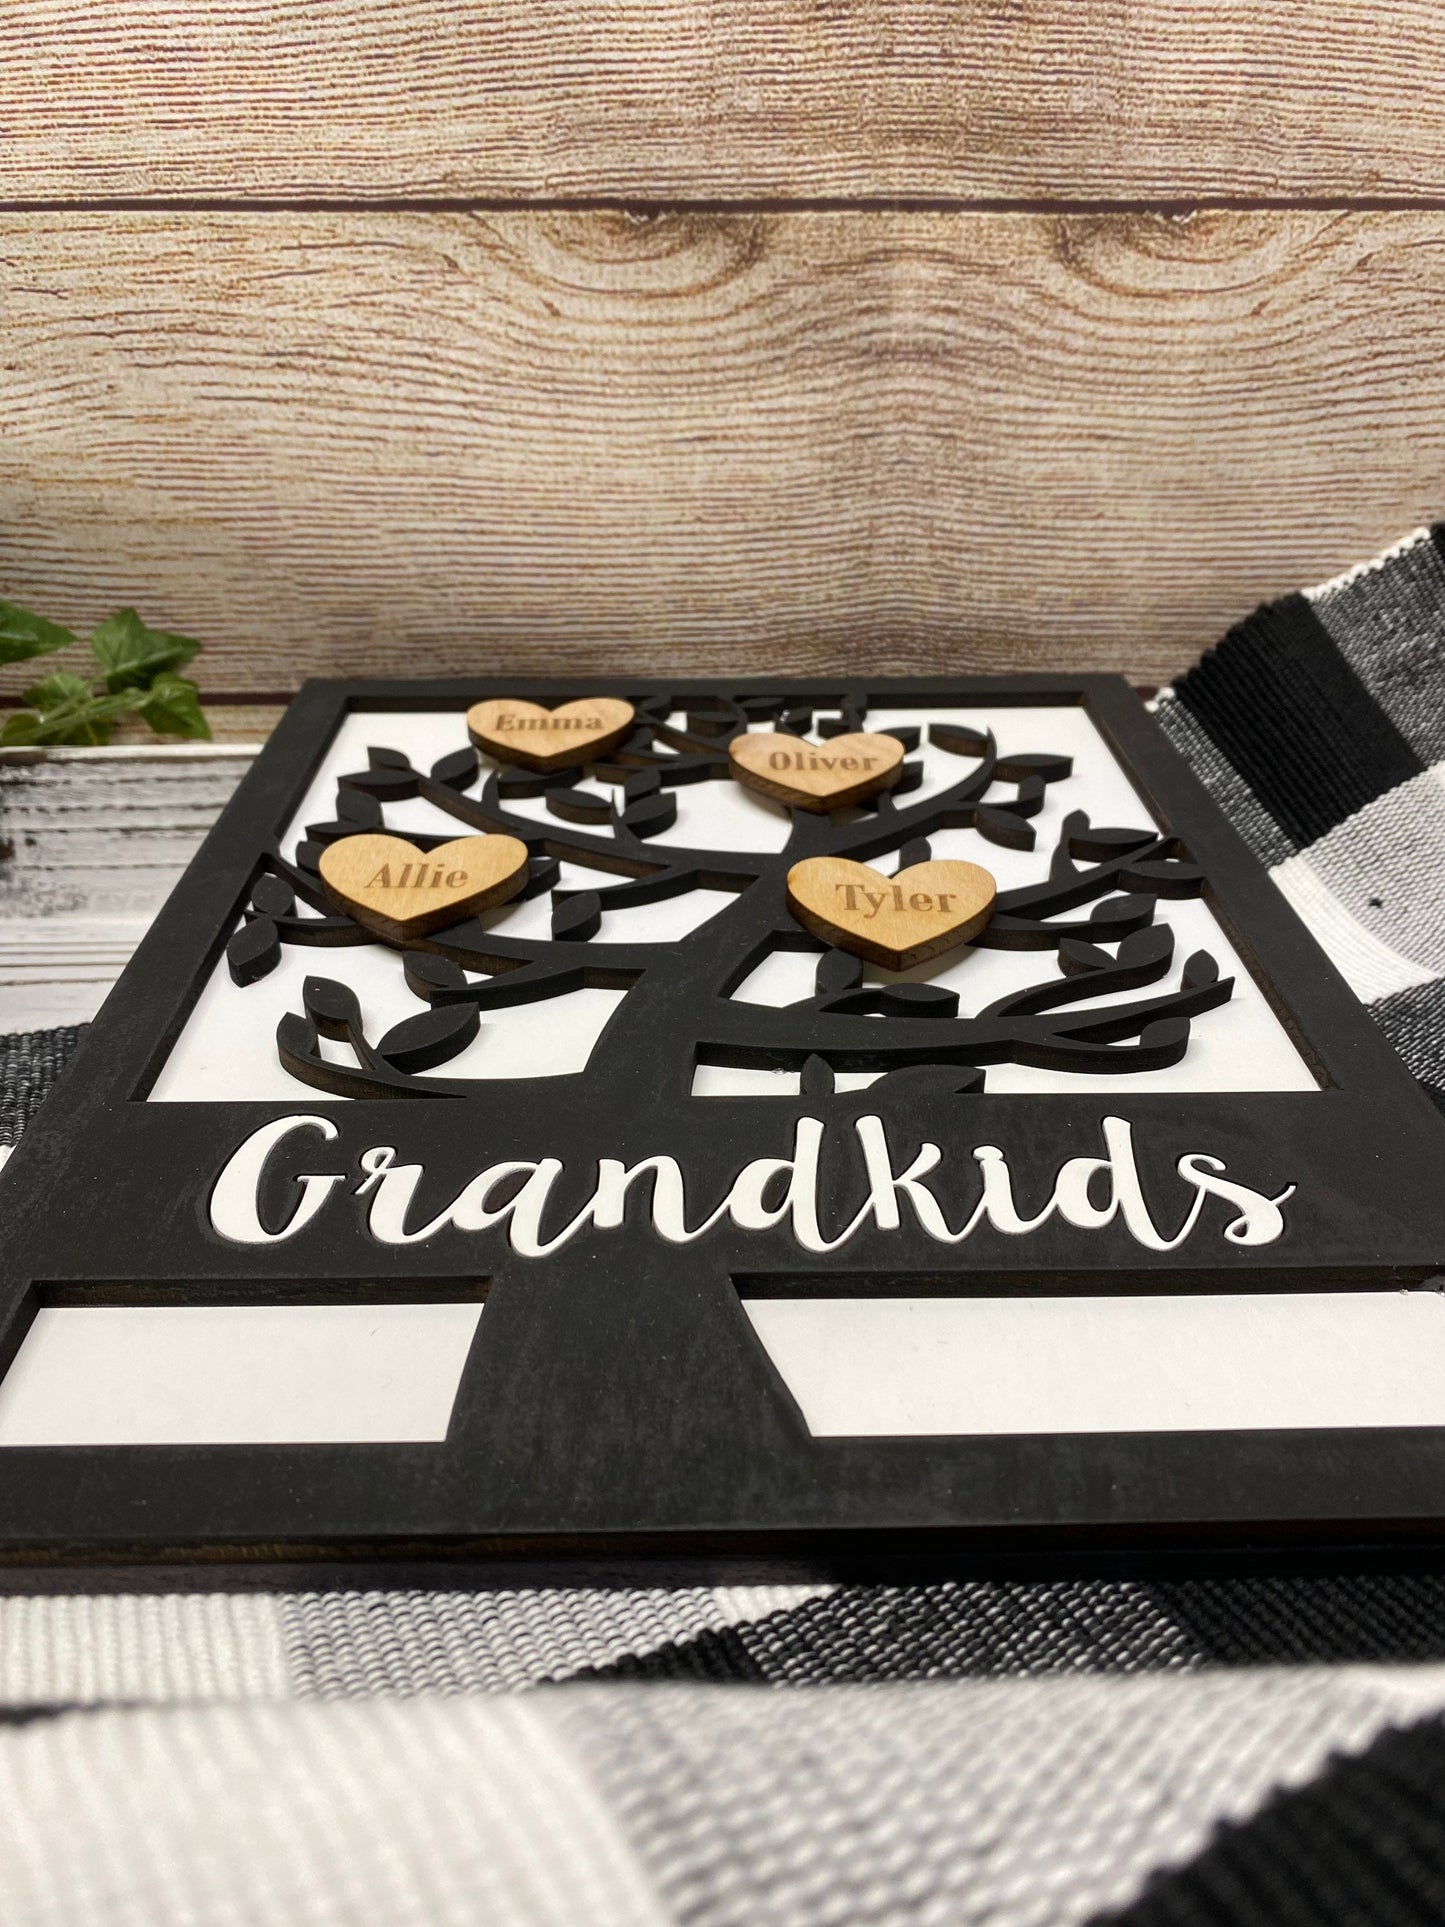 Grandkids Family Tree Sign